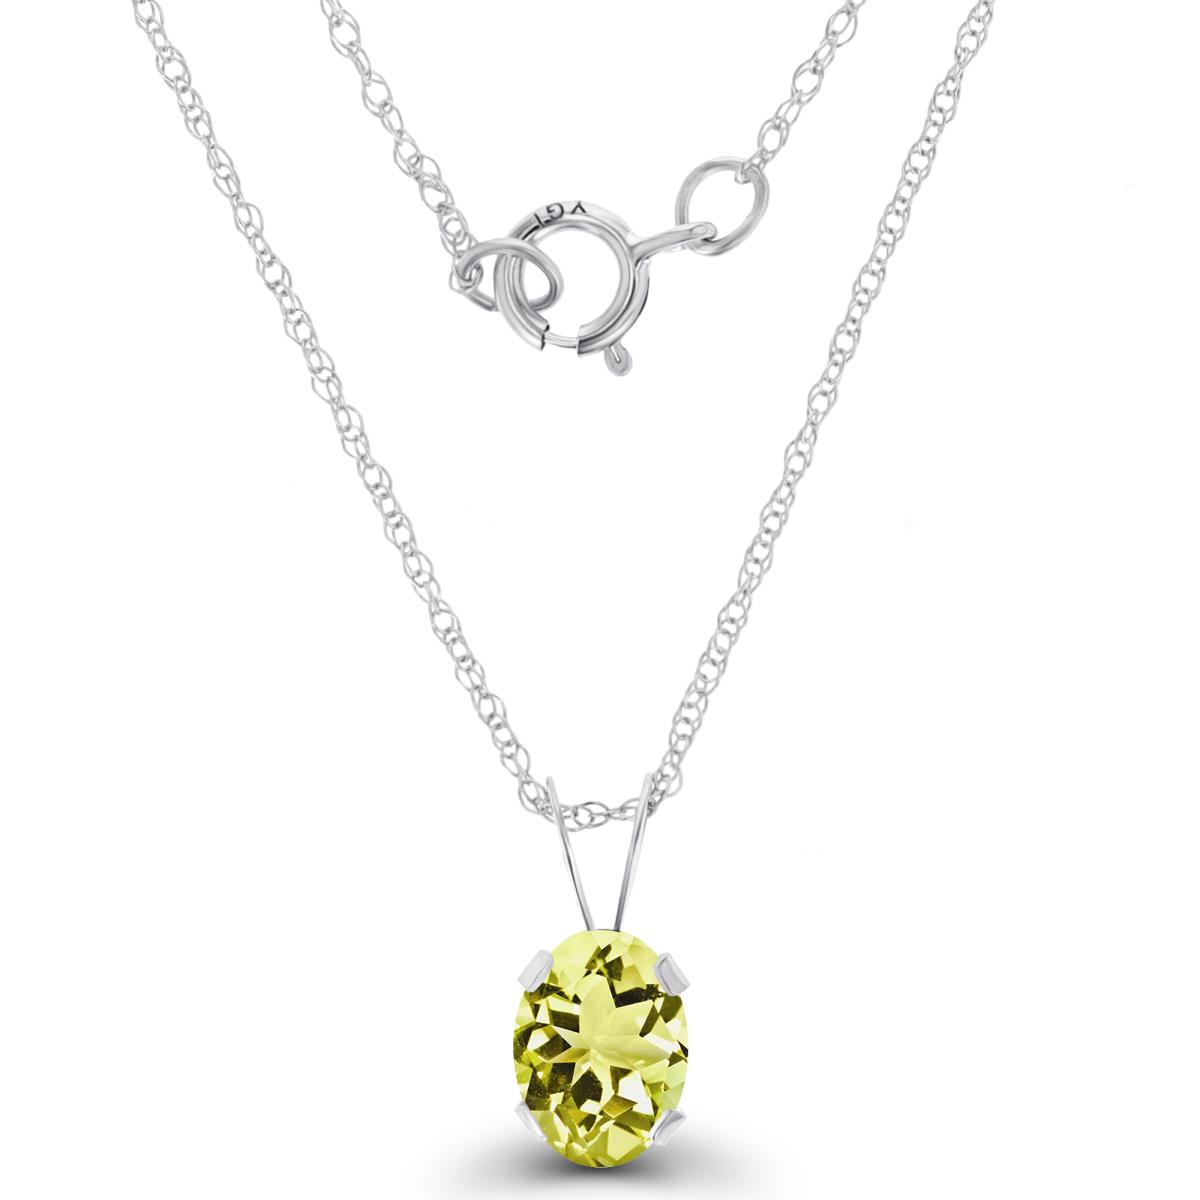 14K White Gold 7x5mm Oval Lemon Quartz 18" Rope Chain Necklace